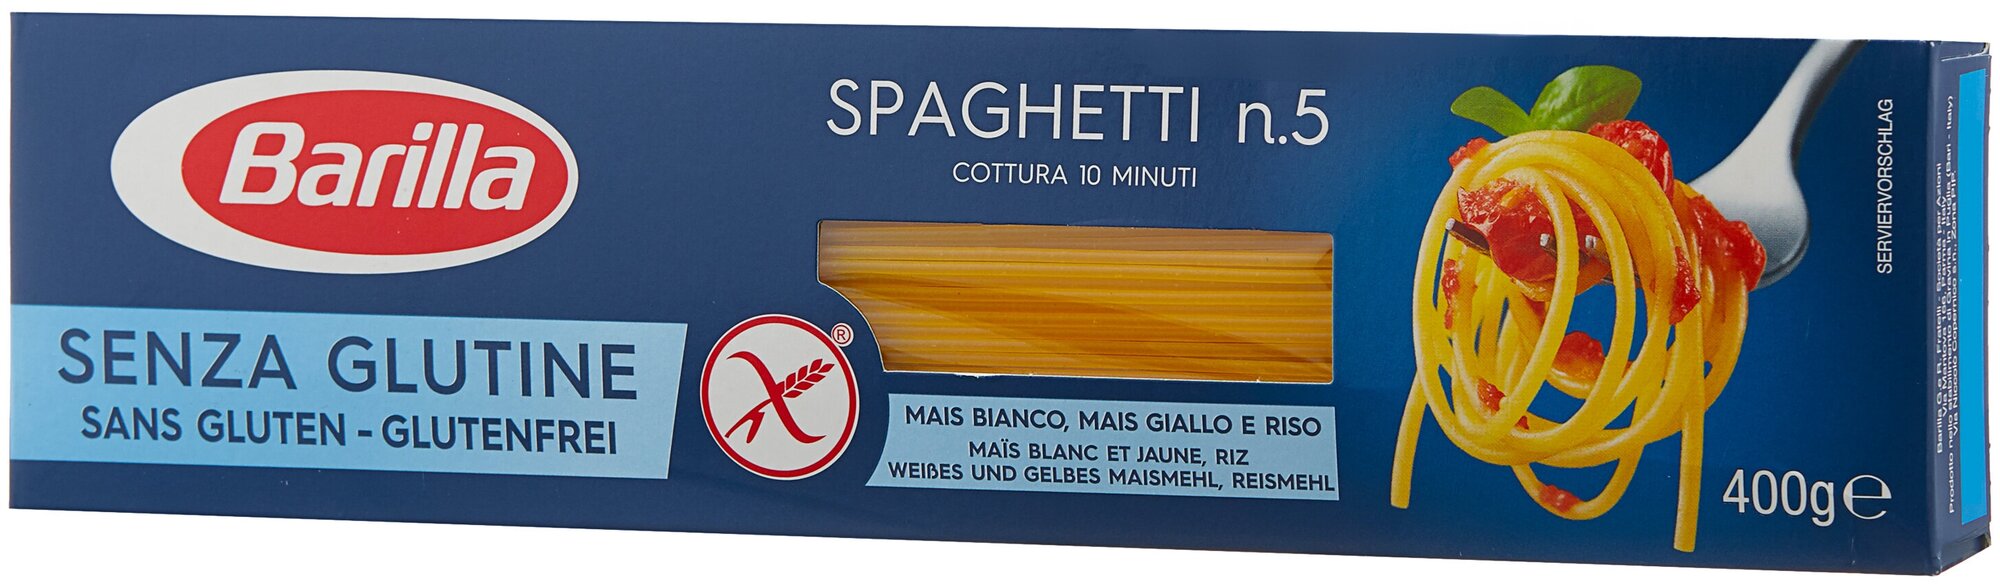 Макароны Barilla Gluten Free Спагетти 400г Barilla G. e R. Fratelli - фото №3